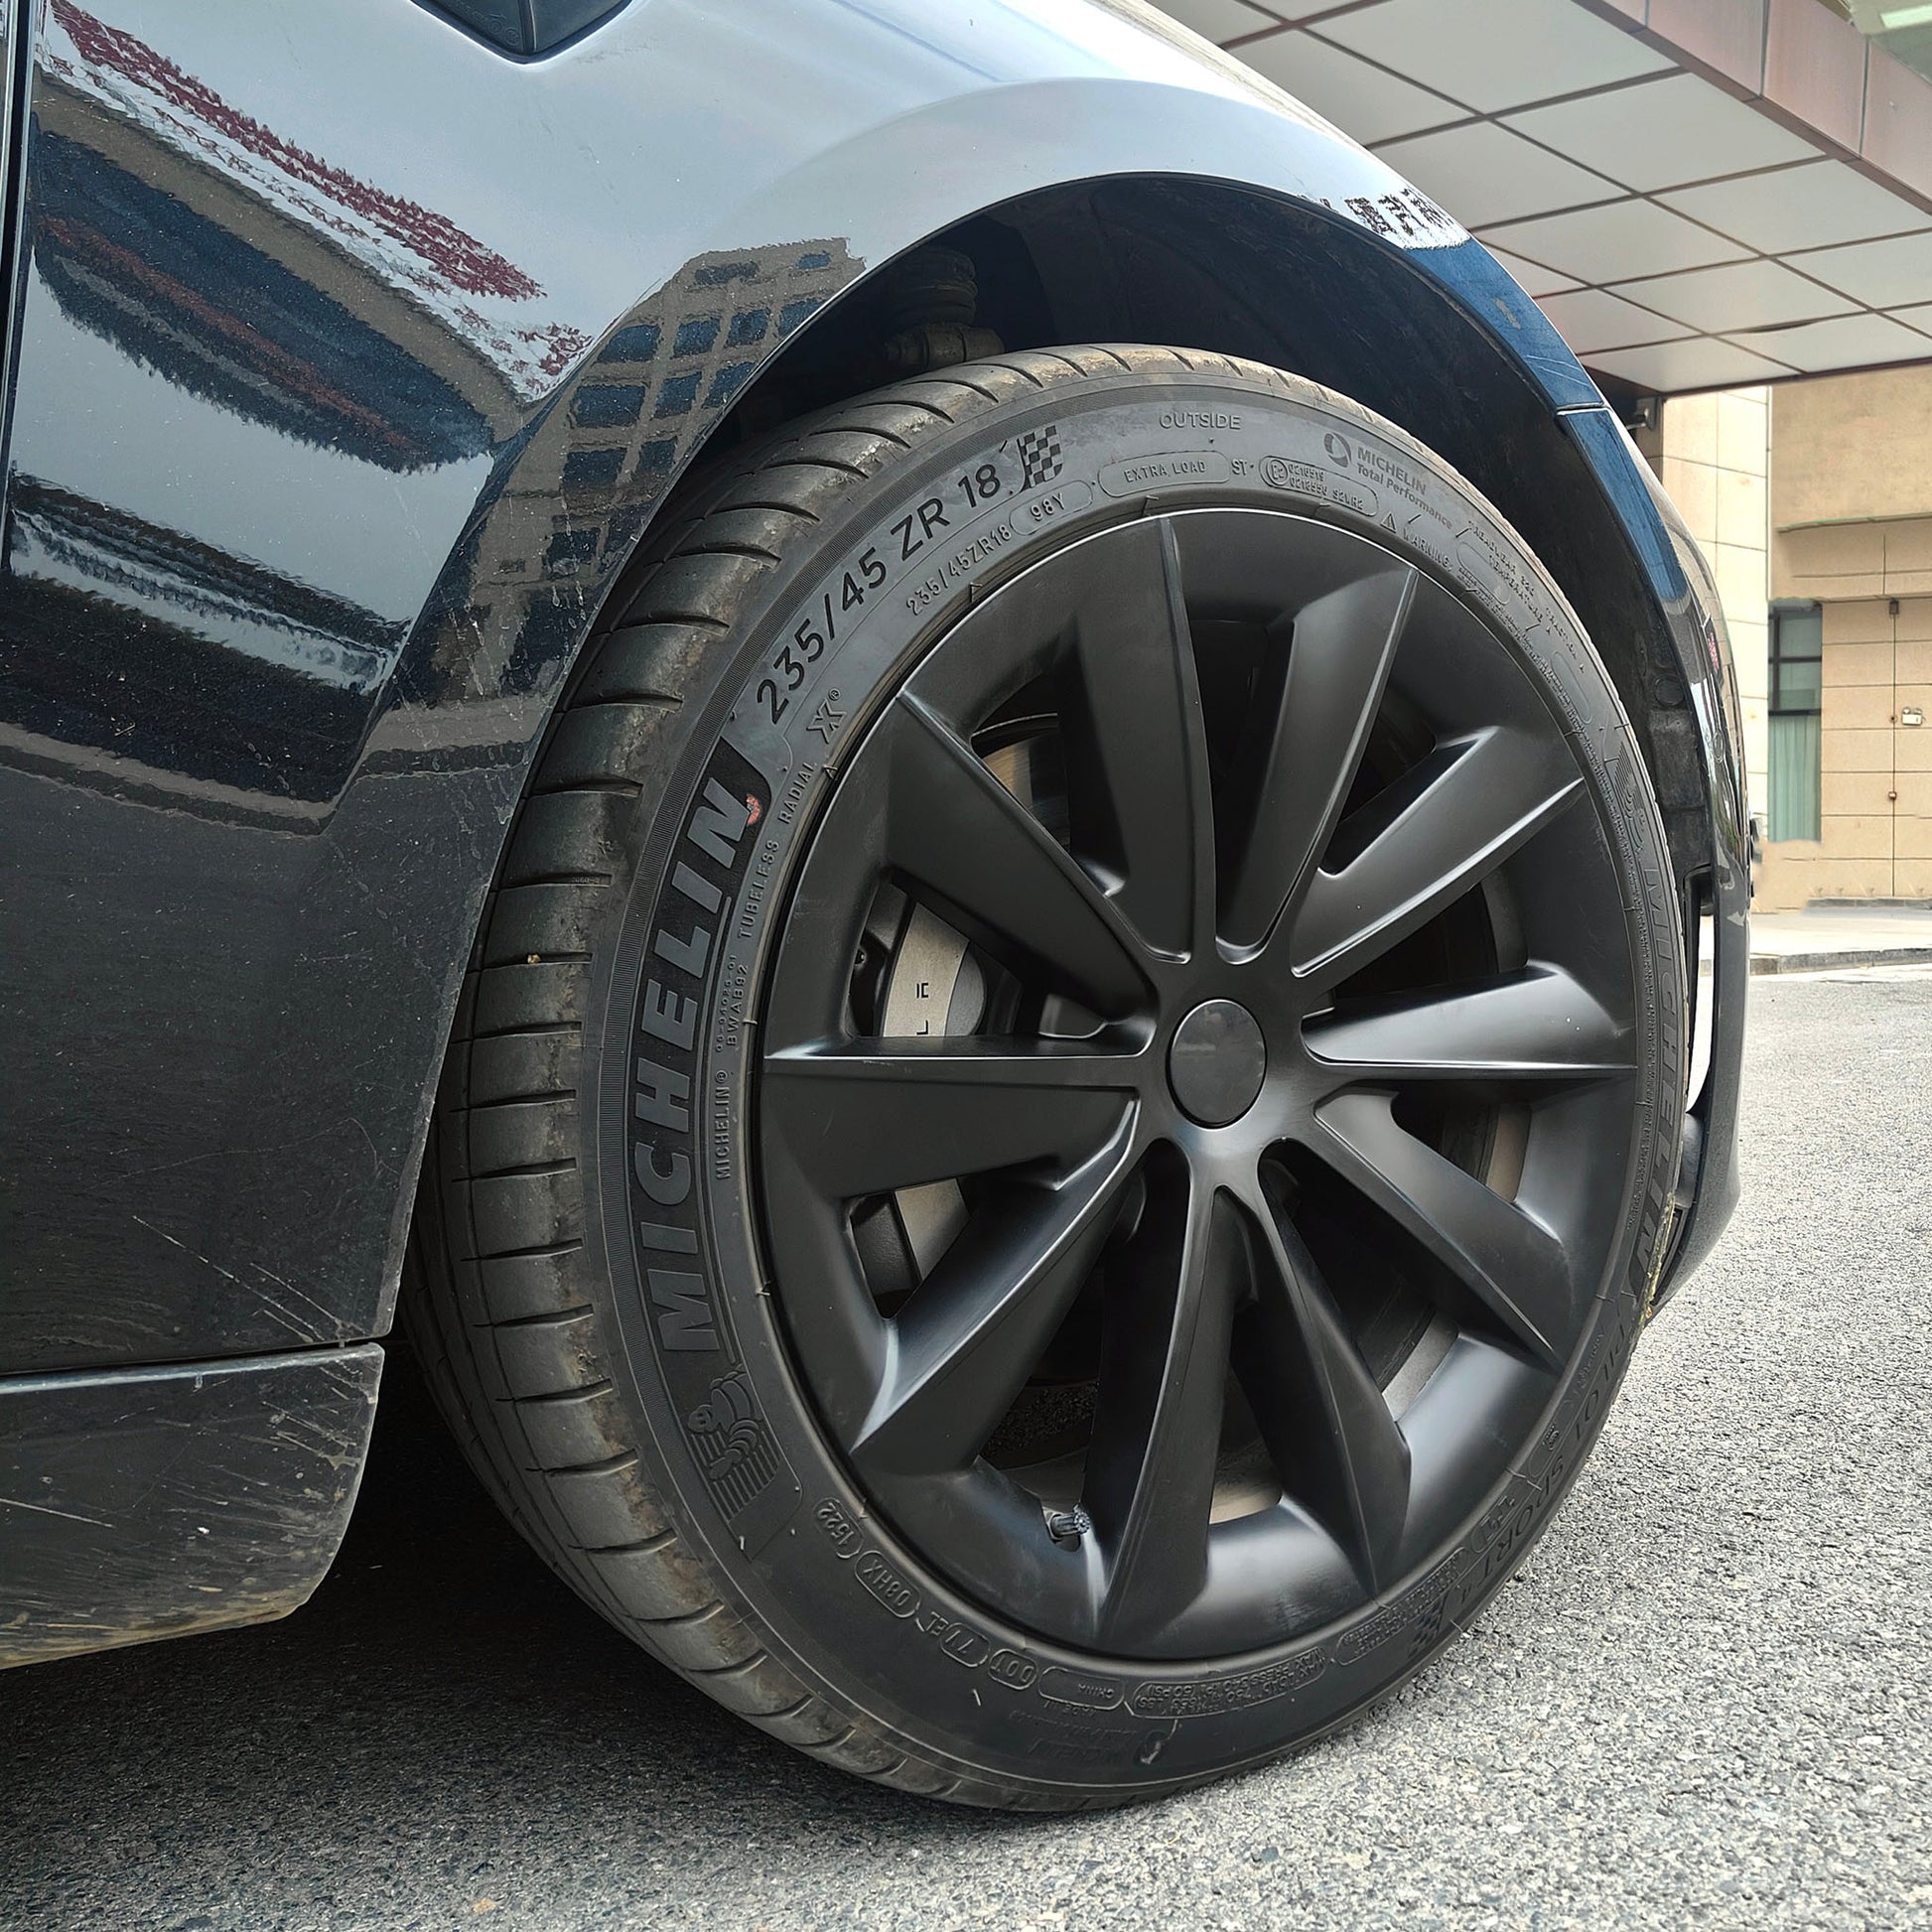 Cyclone-style Hubcaps Wheel Covers For Tesla Model 3 18'' Aero wheels